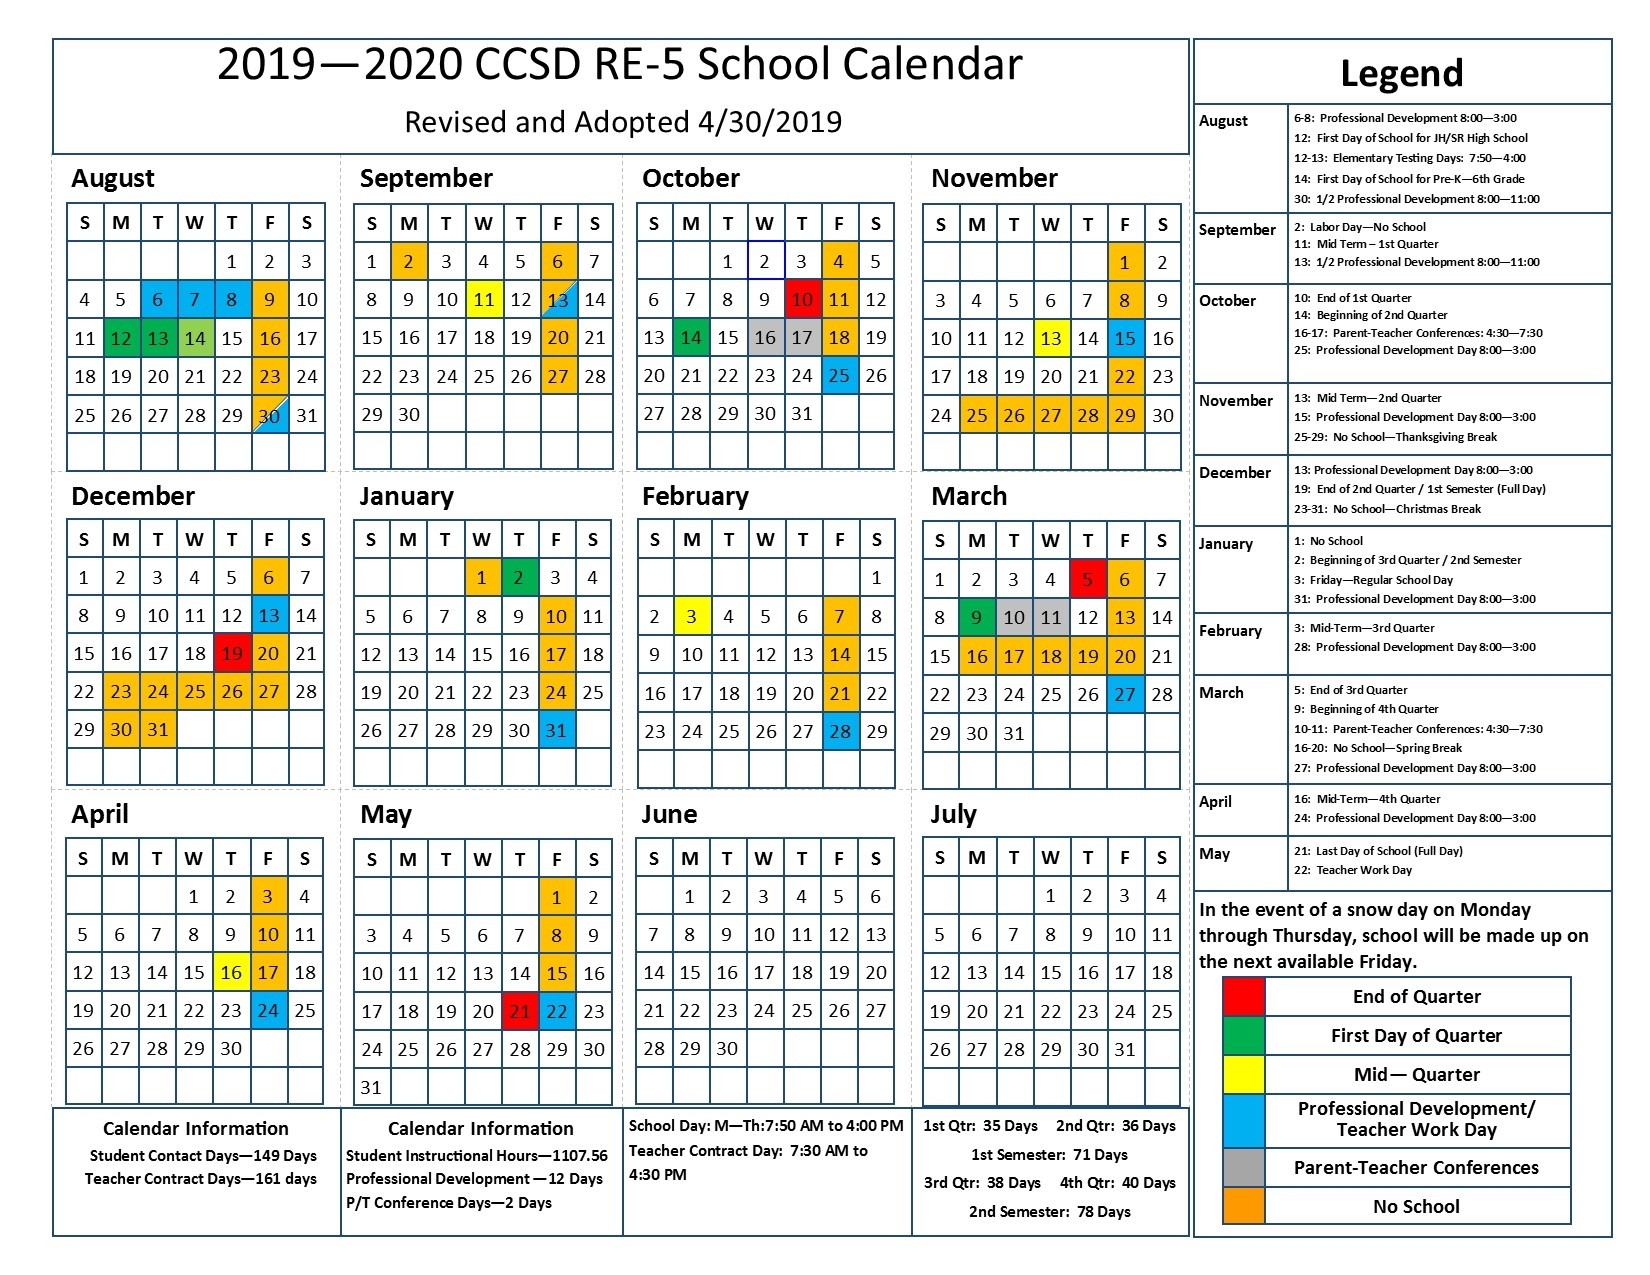 wayne township ave school calendar 2019-20